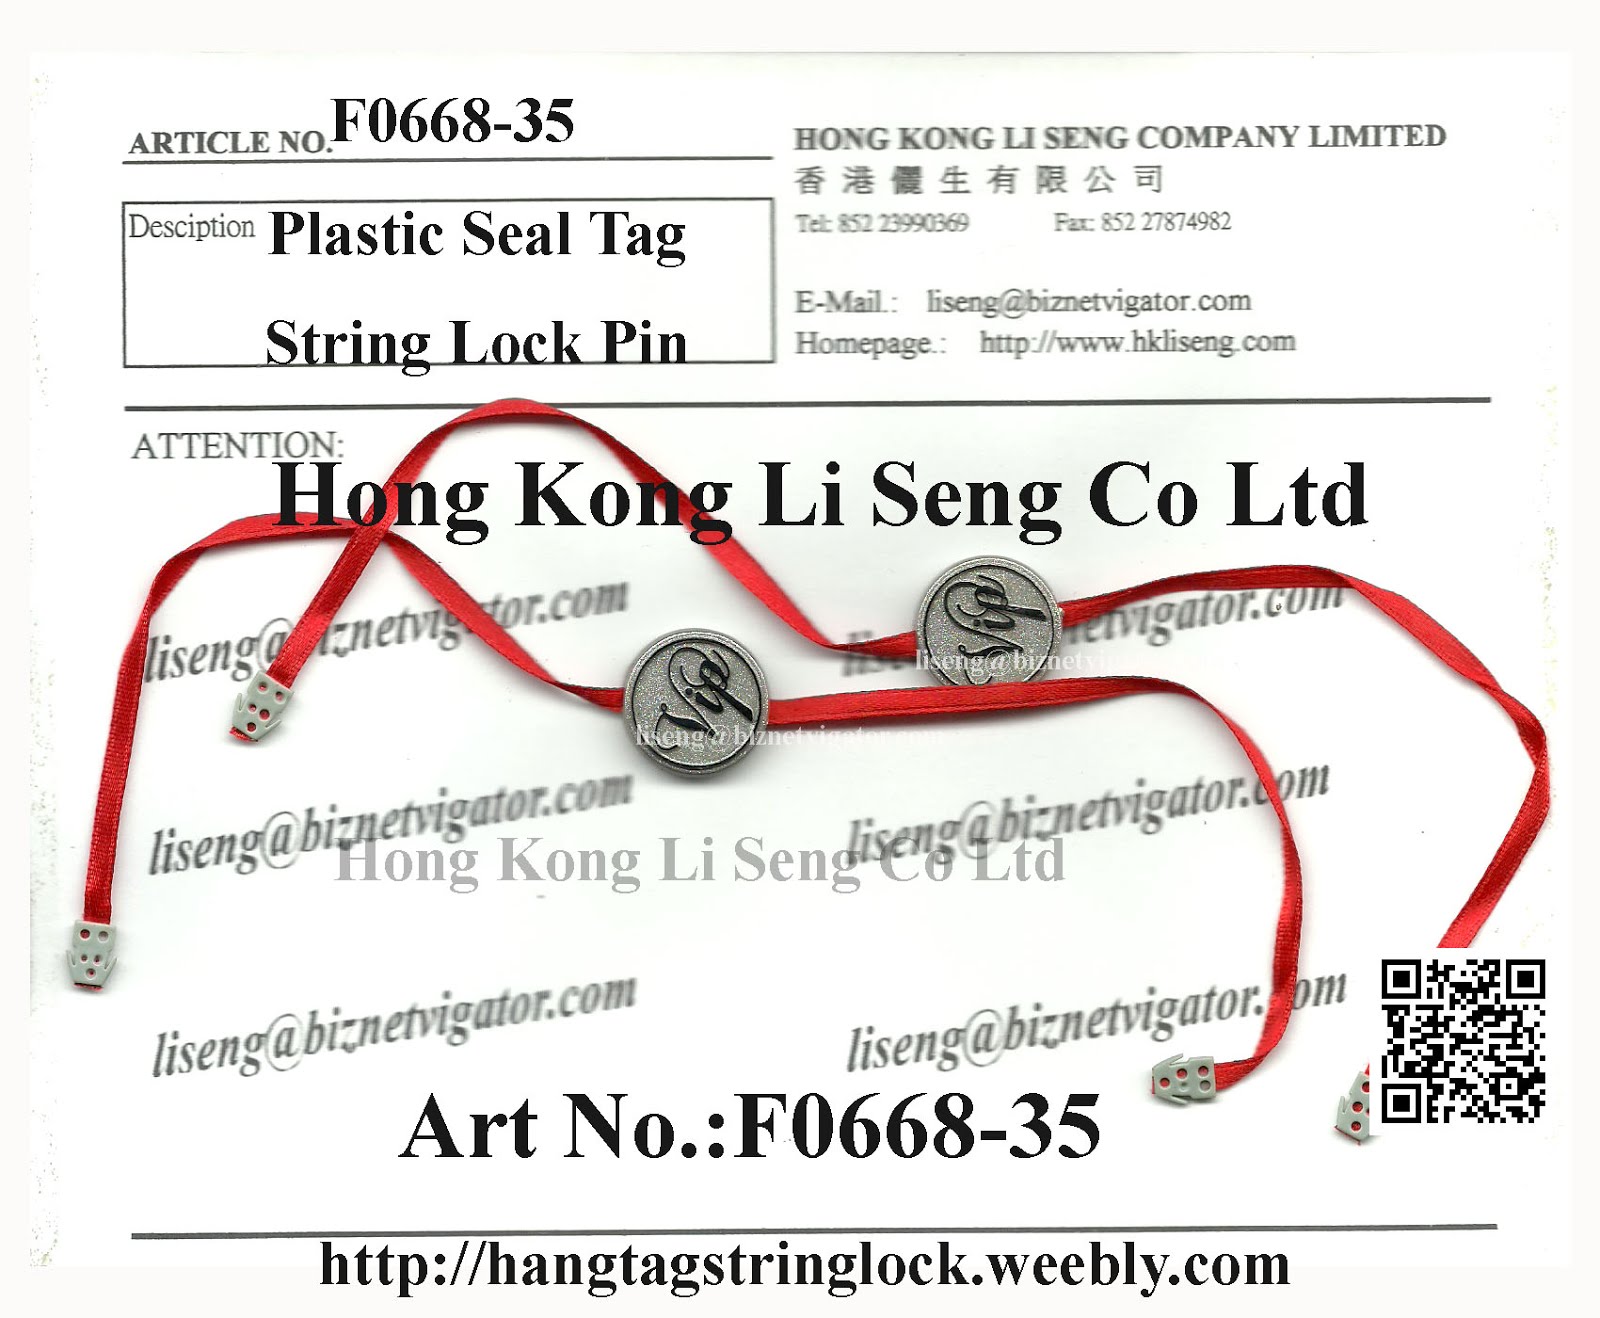 Private-Label Apparel - Plastic Seal String Lock Pin